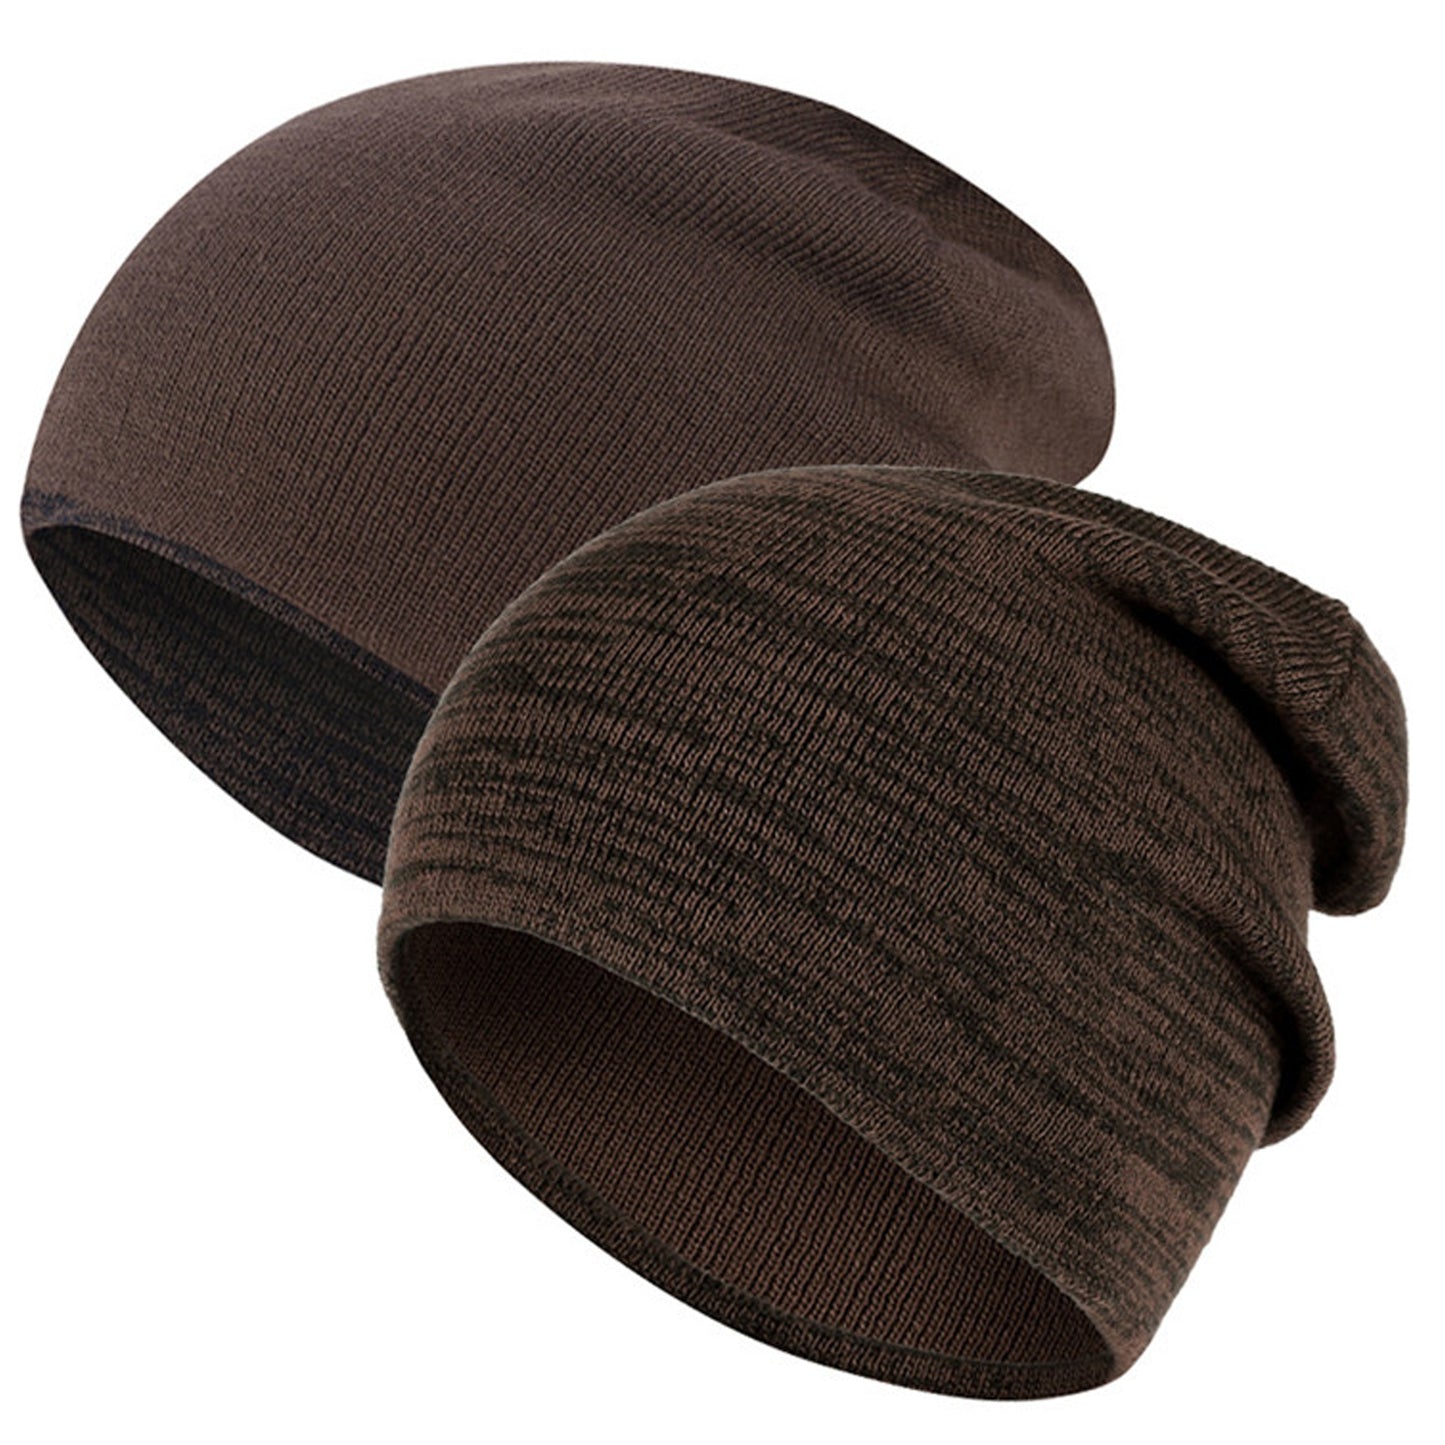 SOBEYO Unisex Reversible Beanie One-Tone Sweater Knit Warm Soft Hats Brown